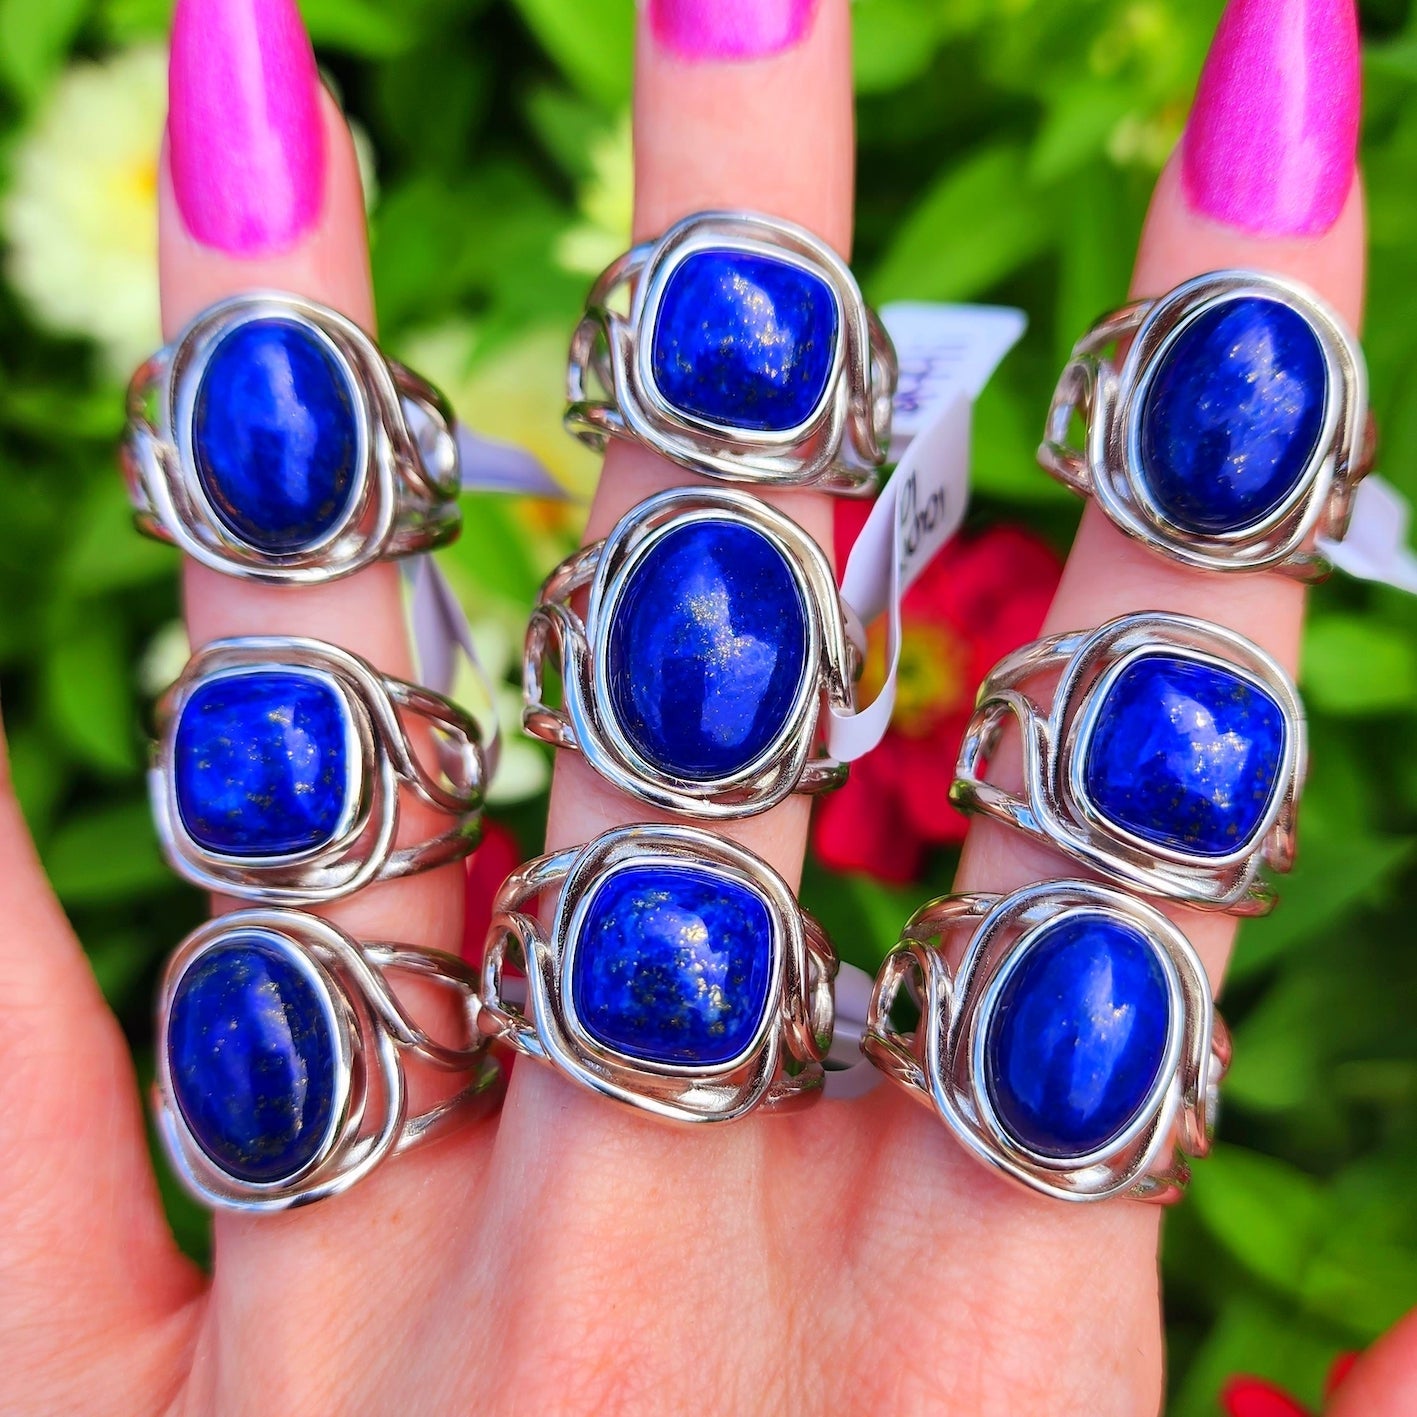 Enchanting Lapis Lazuli Finger Cuff Rings